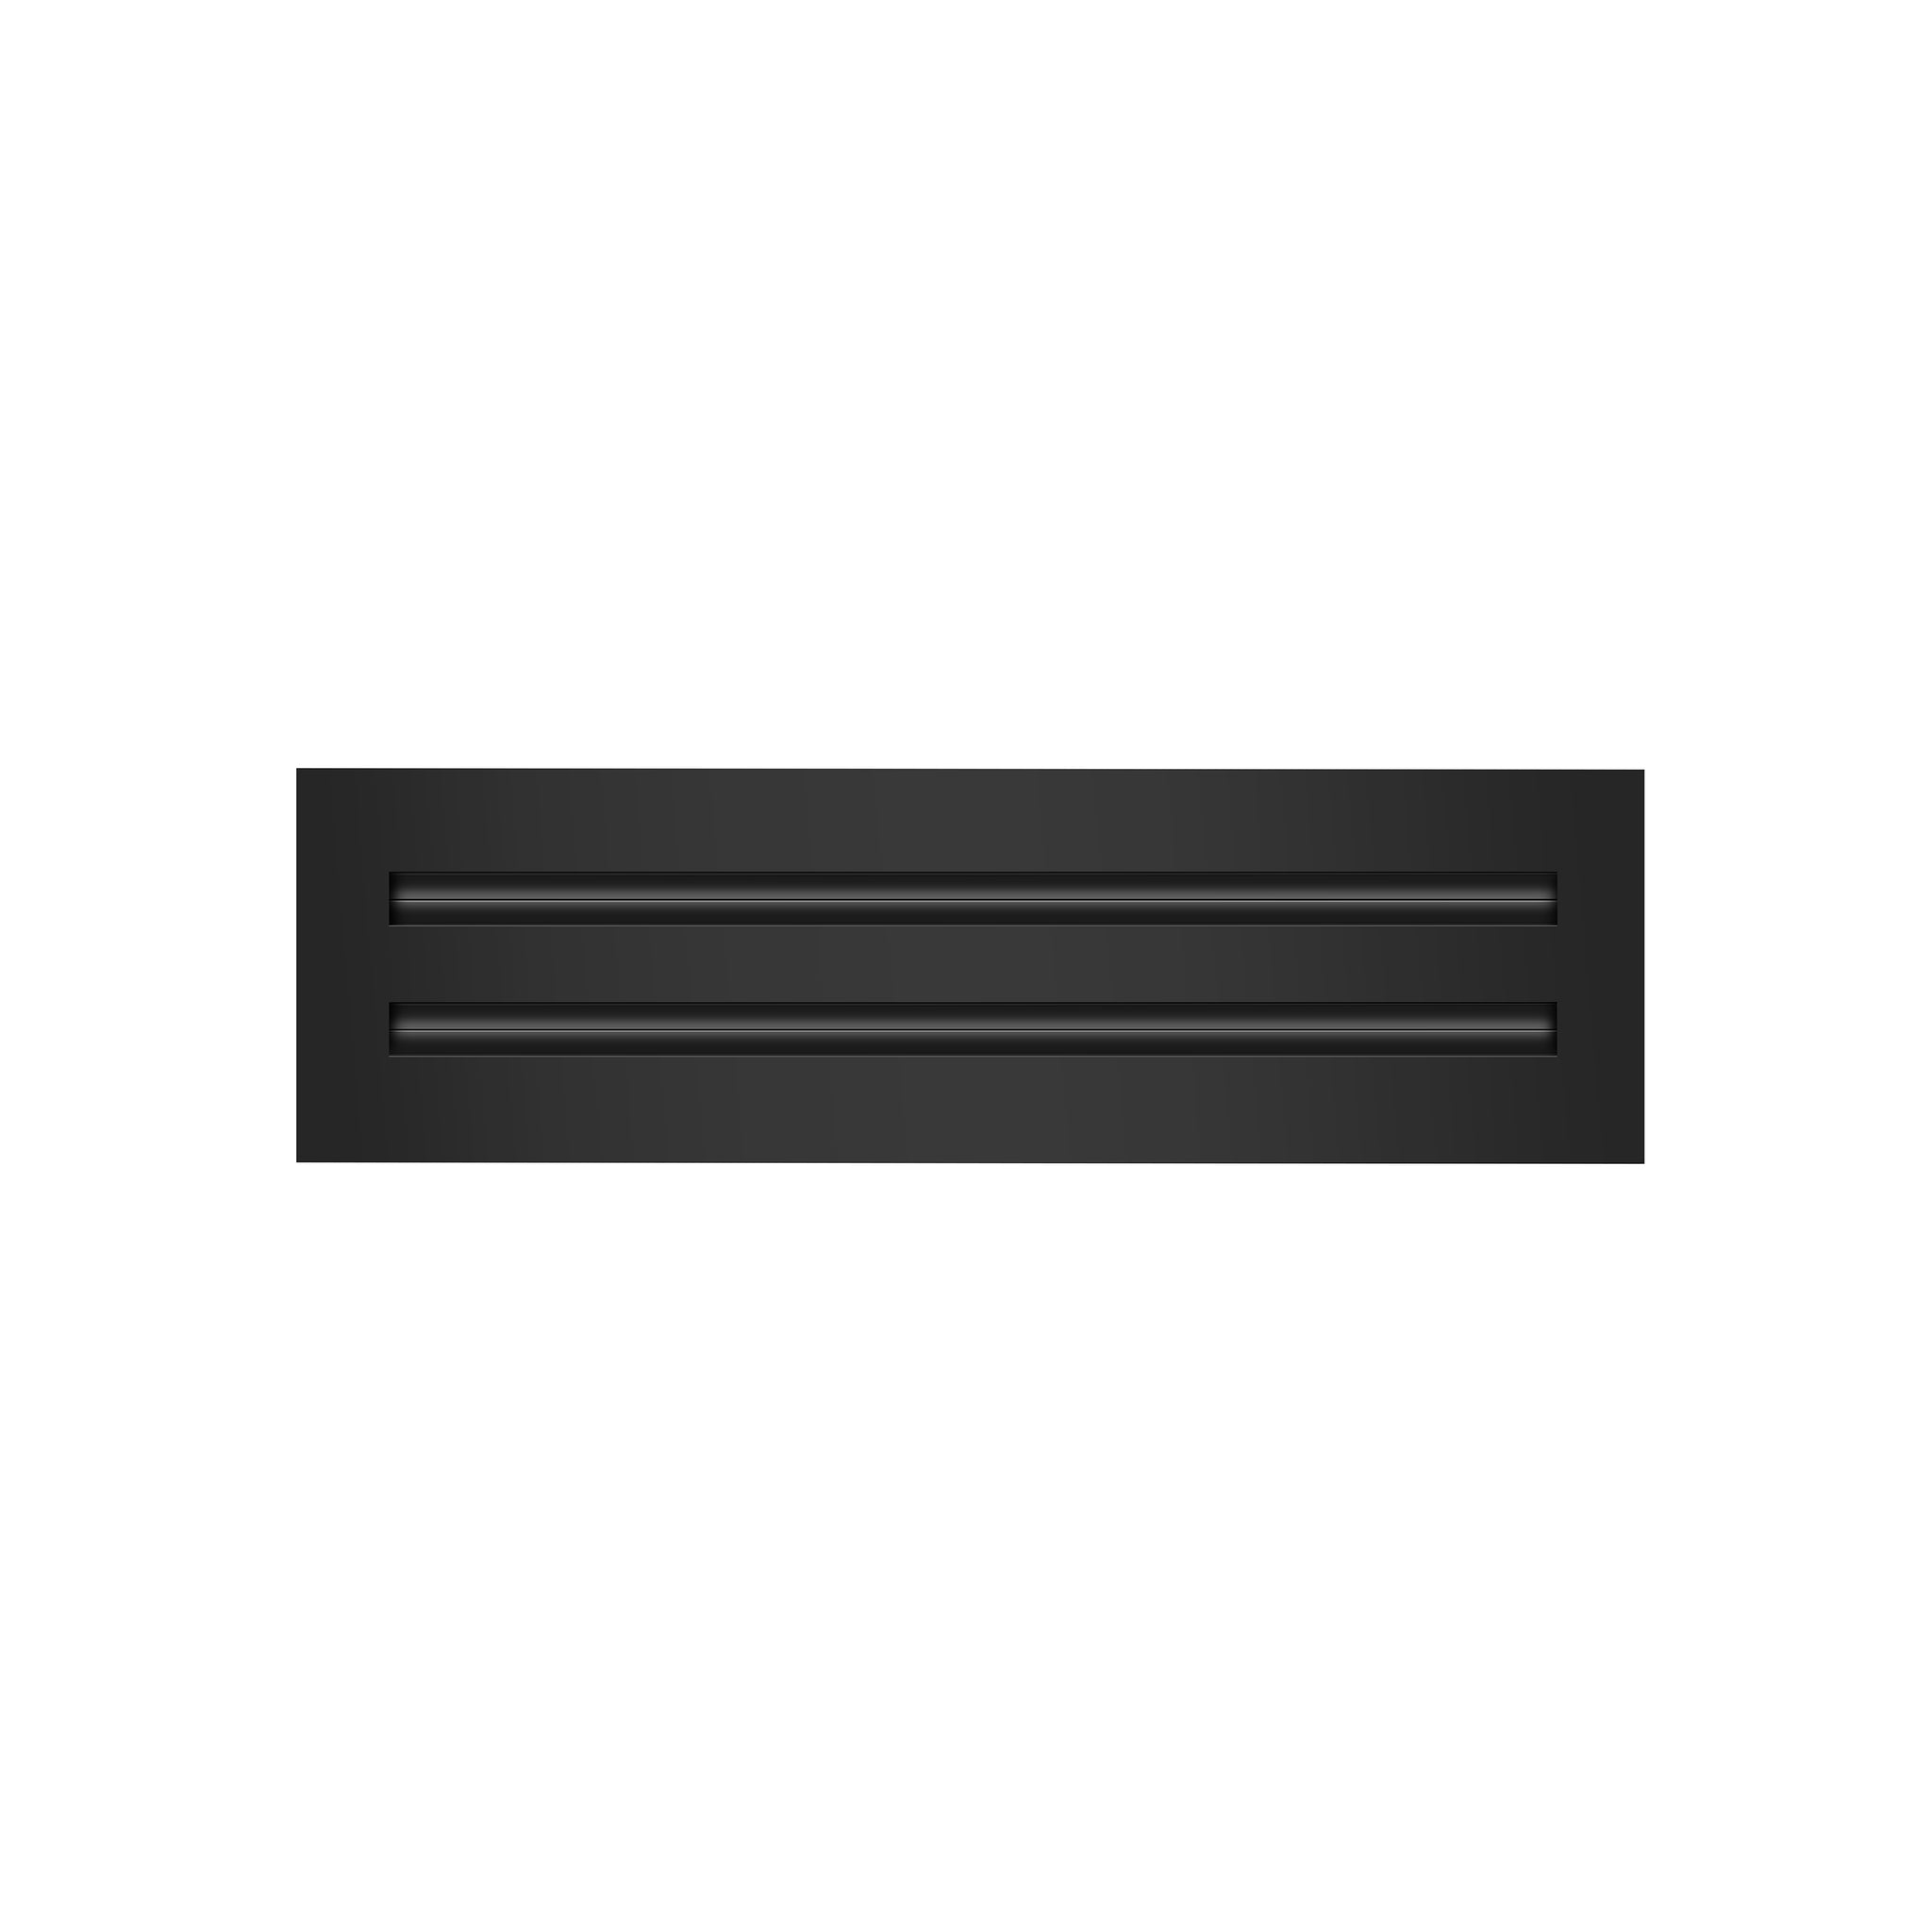 Front View of 14x4 Modern Air Vent Cover Black - 14x4 Standard Linear Slot Diffuser Black - Texas Buildmart